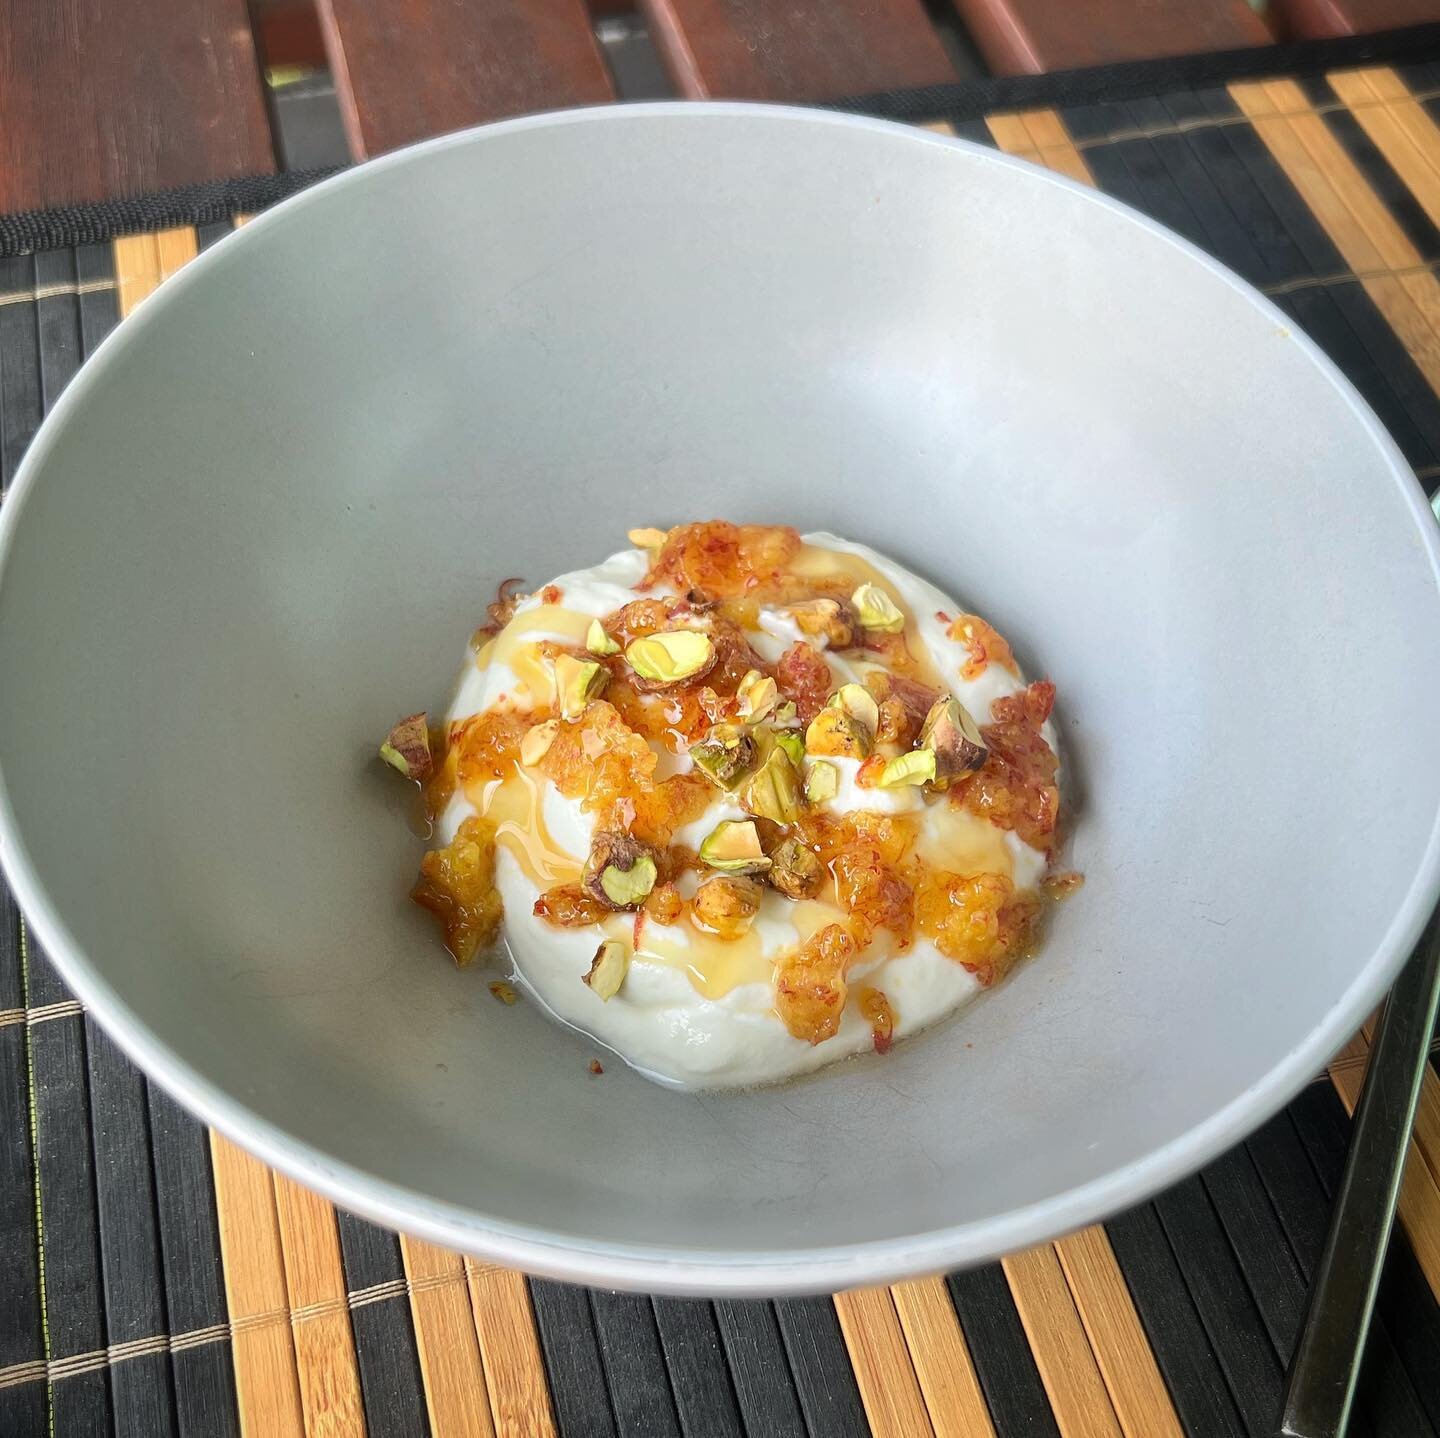 Greek Yogurt w/ Shaved Frozen Ontario Peach, Chopped Pistachios &amp; Salted Honey.
.
Honey: @wildlydelicious_distillery 
.
.
.
#breakfast #yogurt #yum #yummy #yumyum #homemade #eat #eatbetter #food #foodporn #recipe #sharefood #delicious #eating #fo